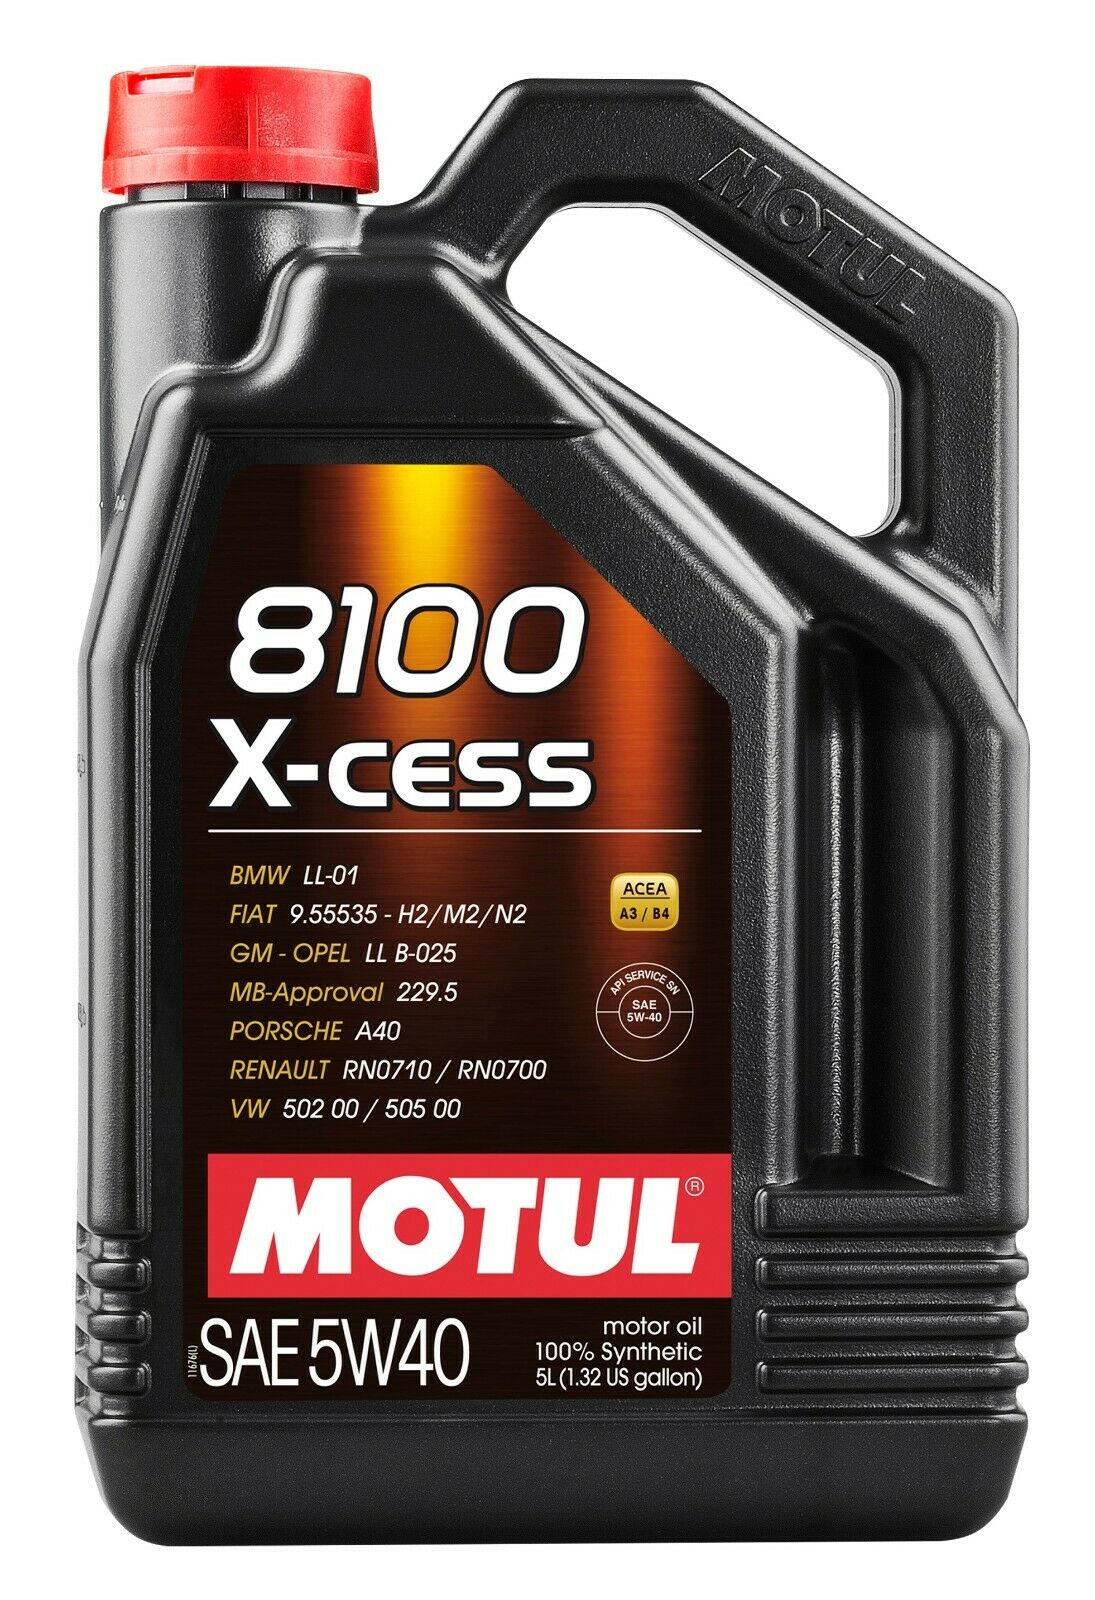 Motul 8100 X-cess 5w40 - 5l -  Fully Synthetic Engine Motor Oil